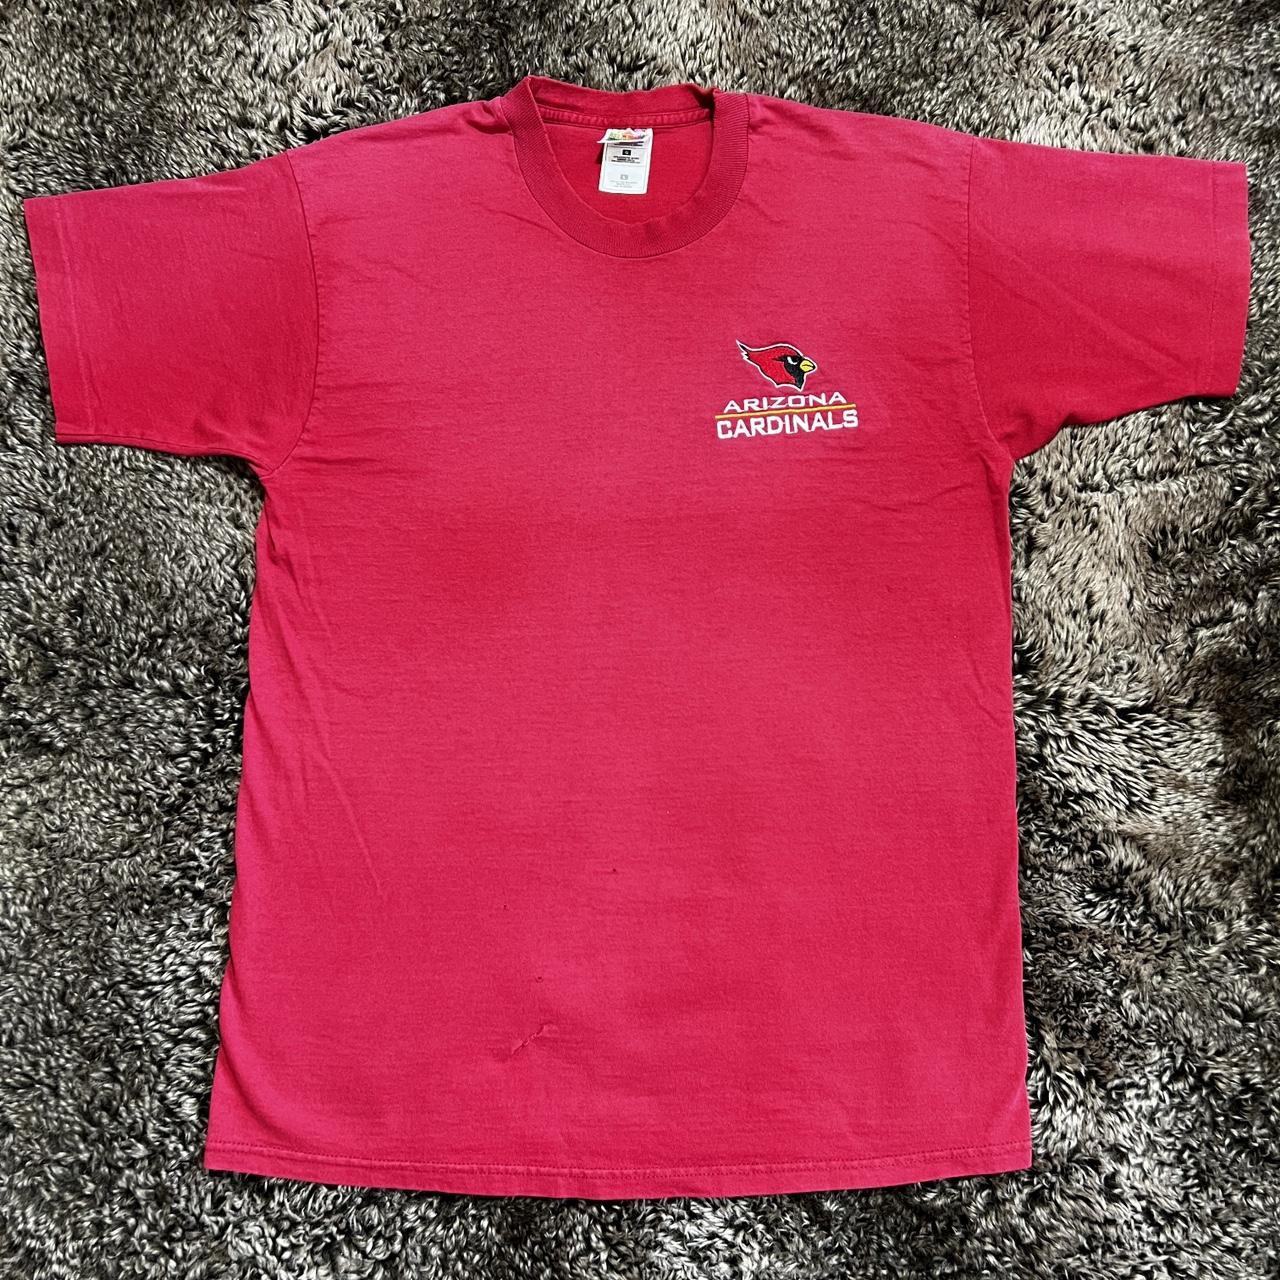 Vintage Embroidered Arizona Cardinals T-Shirt (1990s)